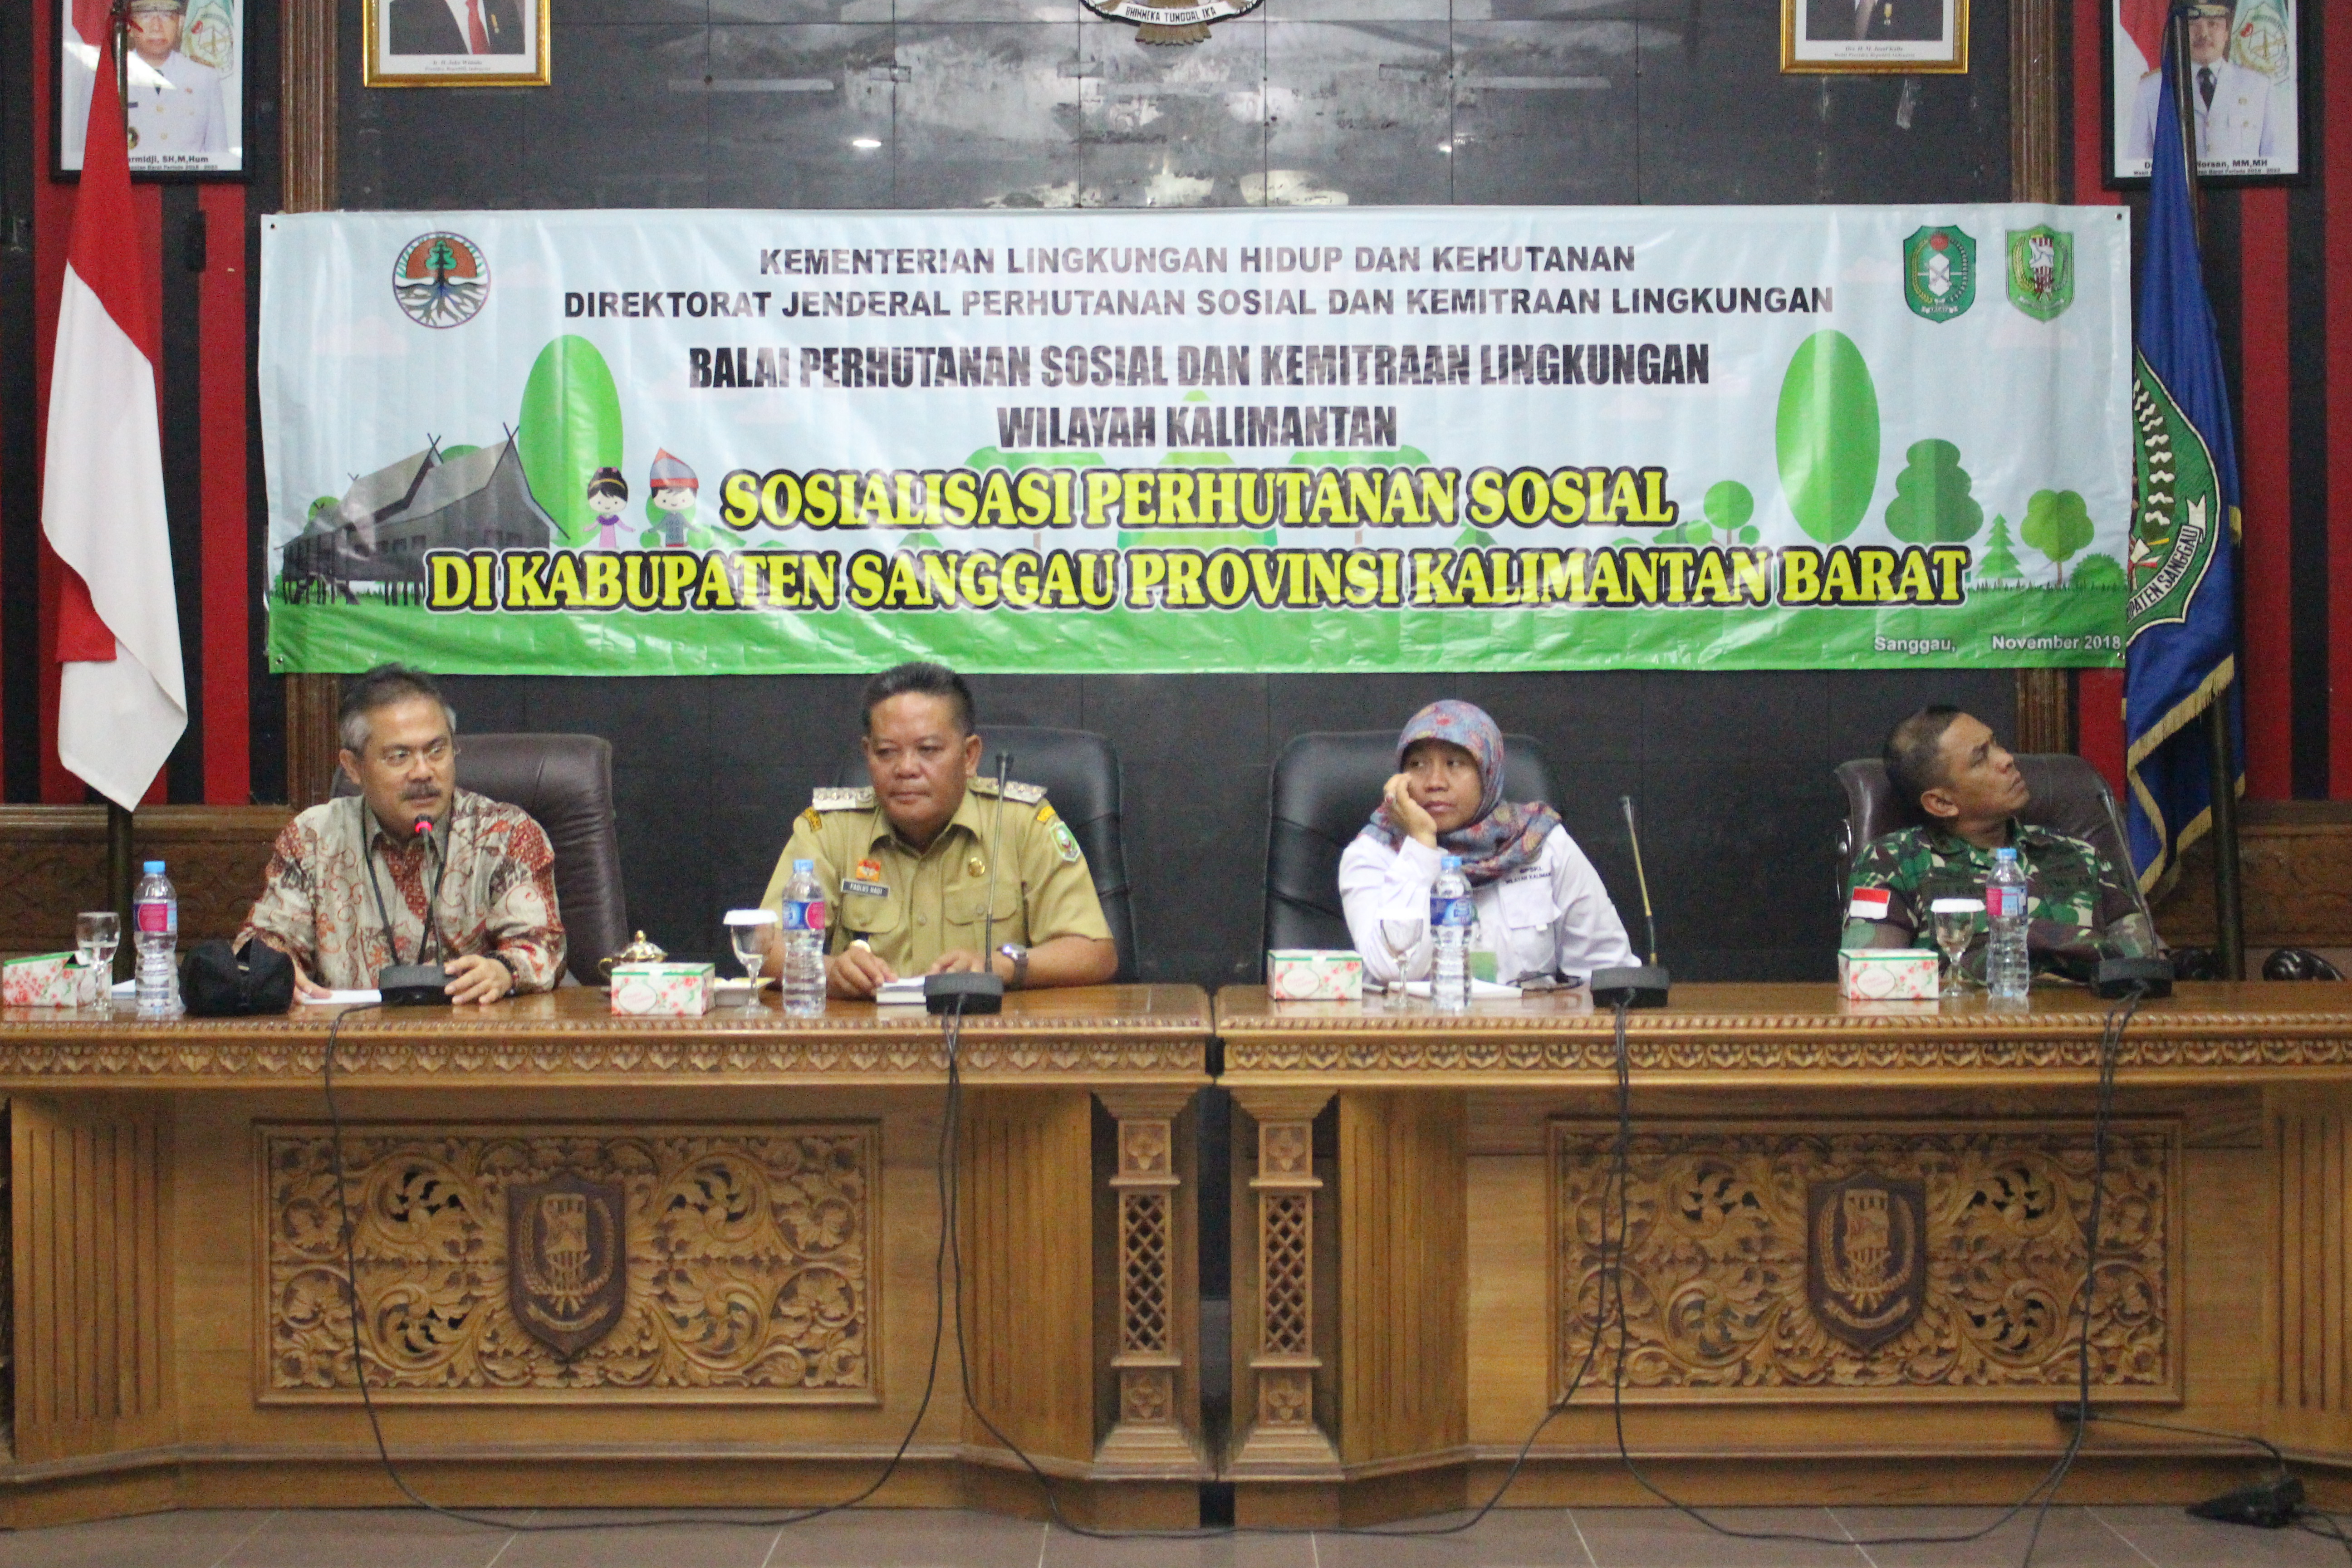 Sosialisasi Perhutanan Sosial Di Kab.Sanggau Provinsi Kalimantan Barat Tahun 2018